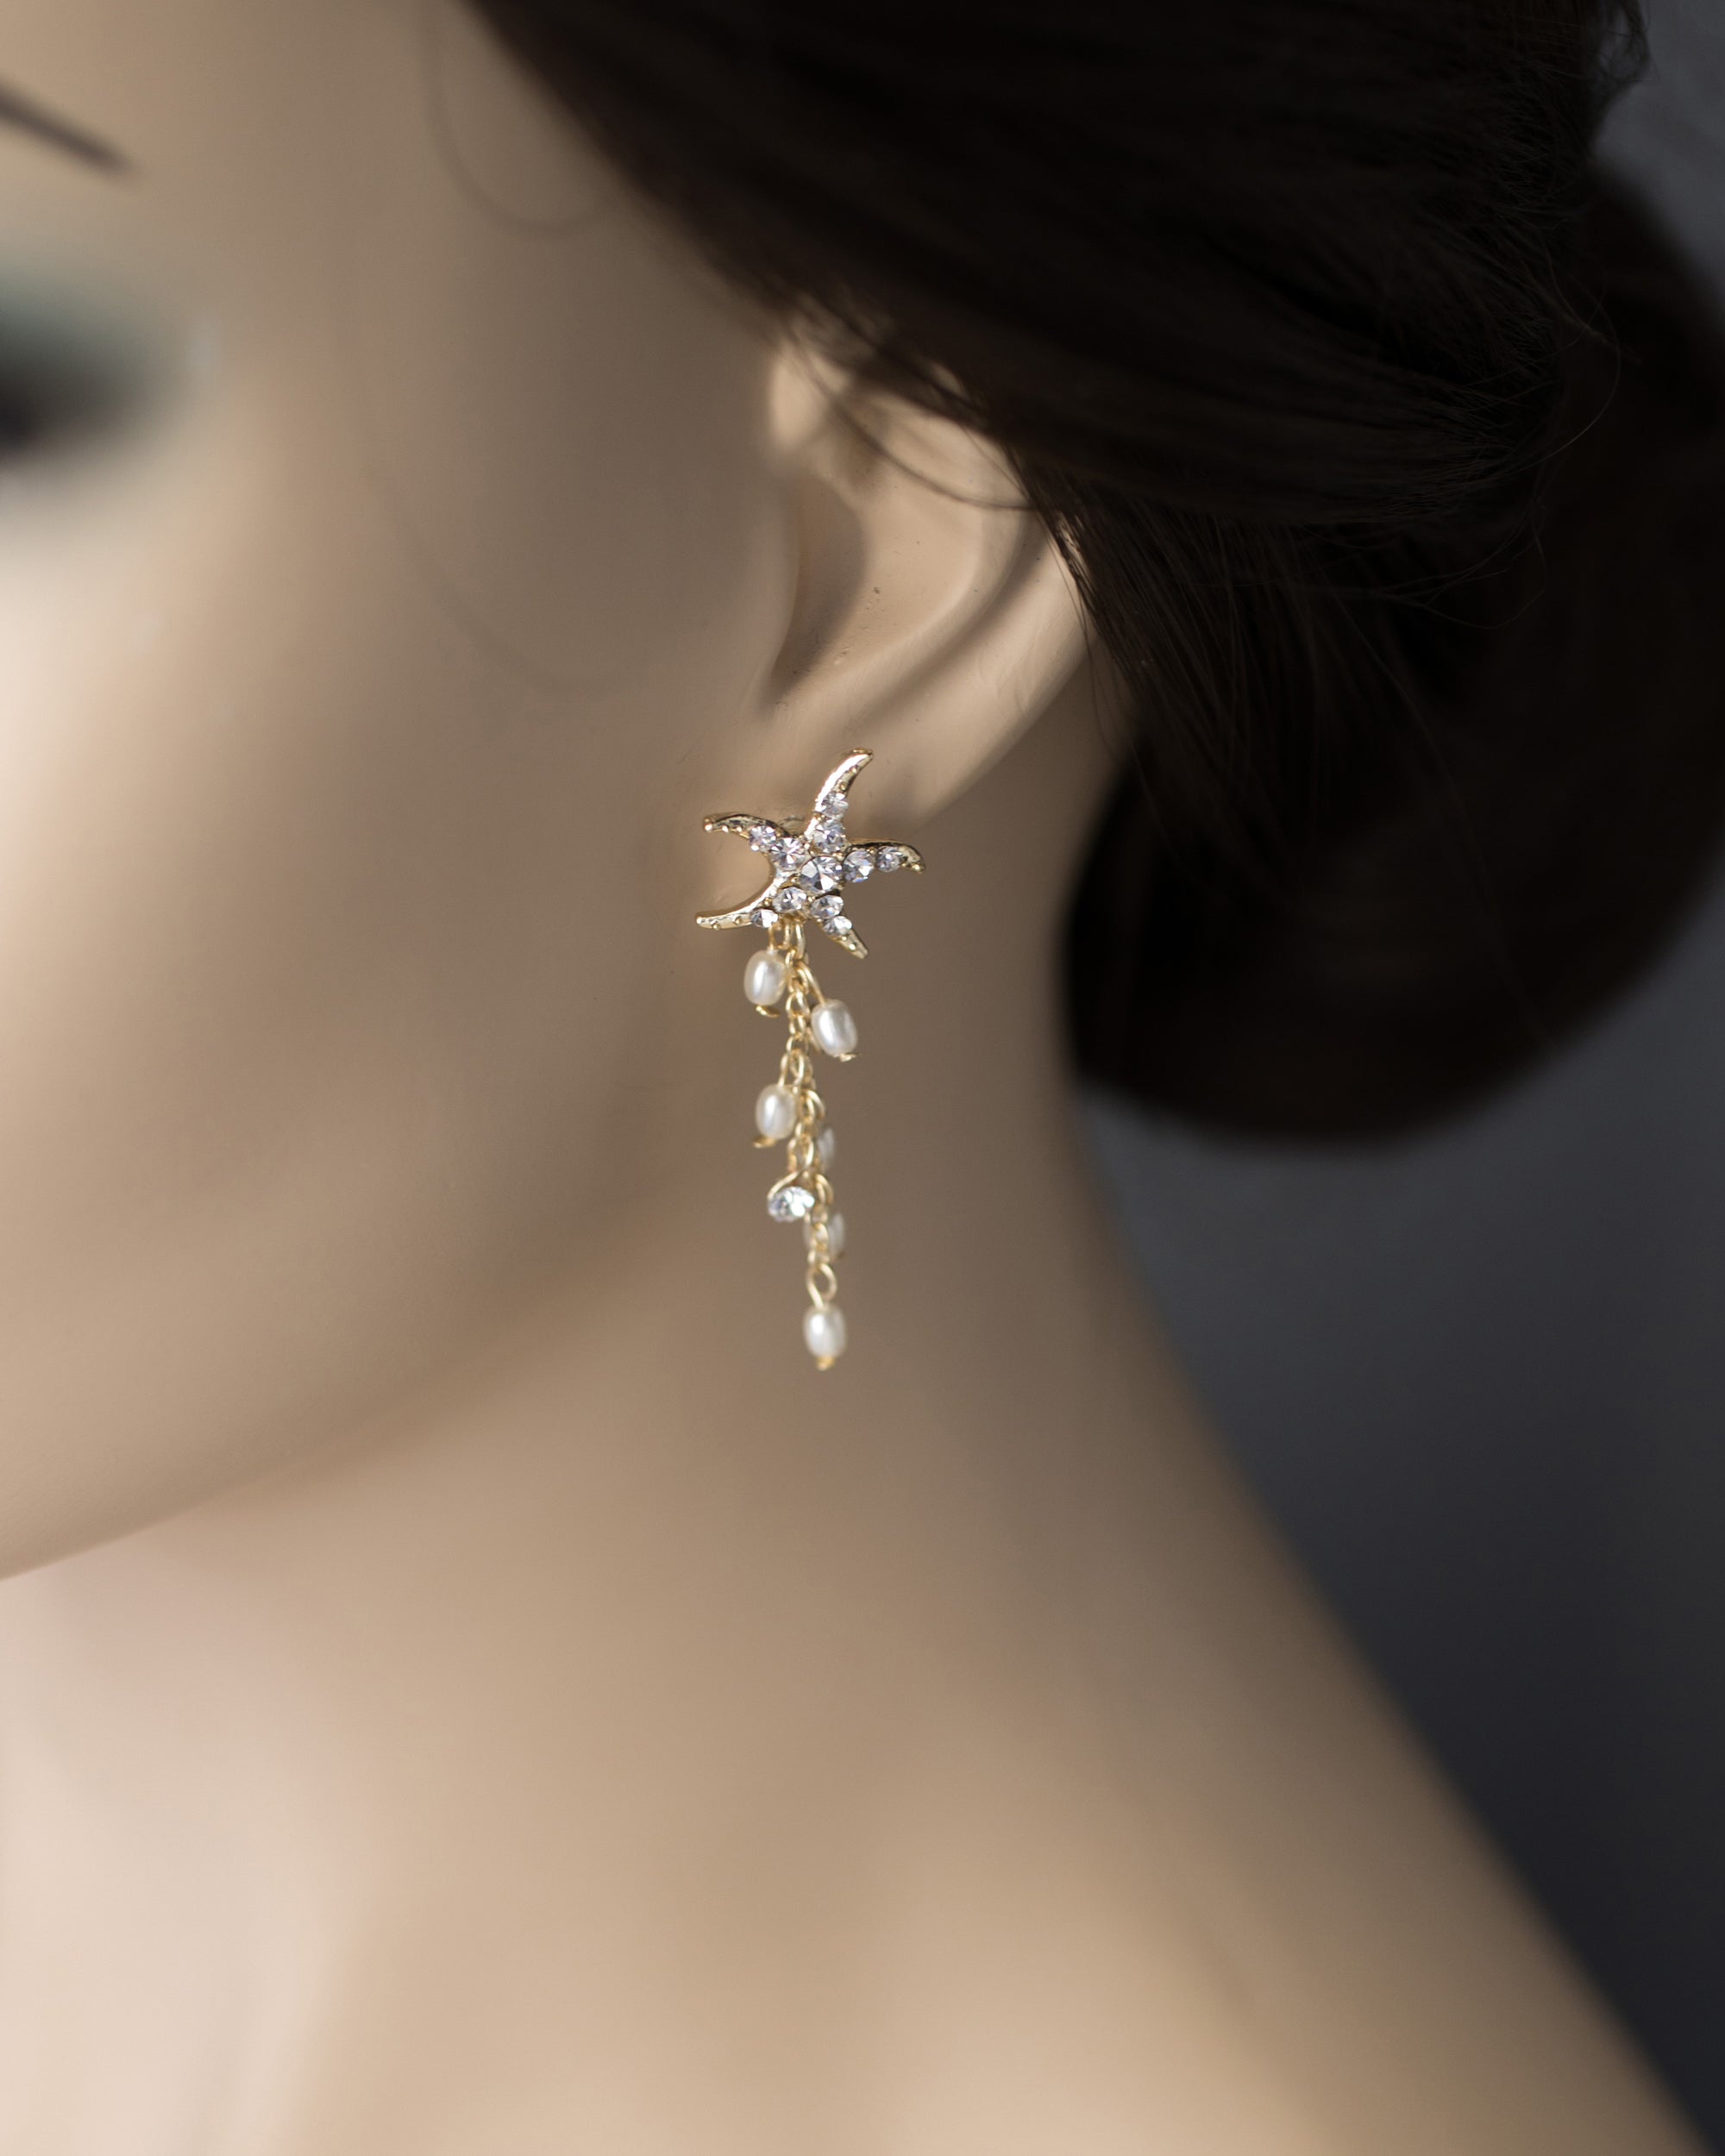 Starfish Dangle Earrings with Pearls - Cassandra Lynne